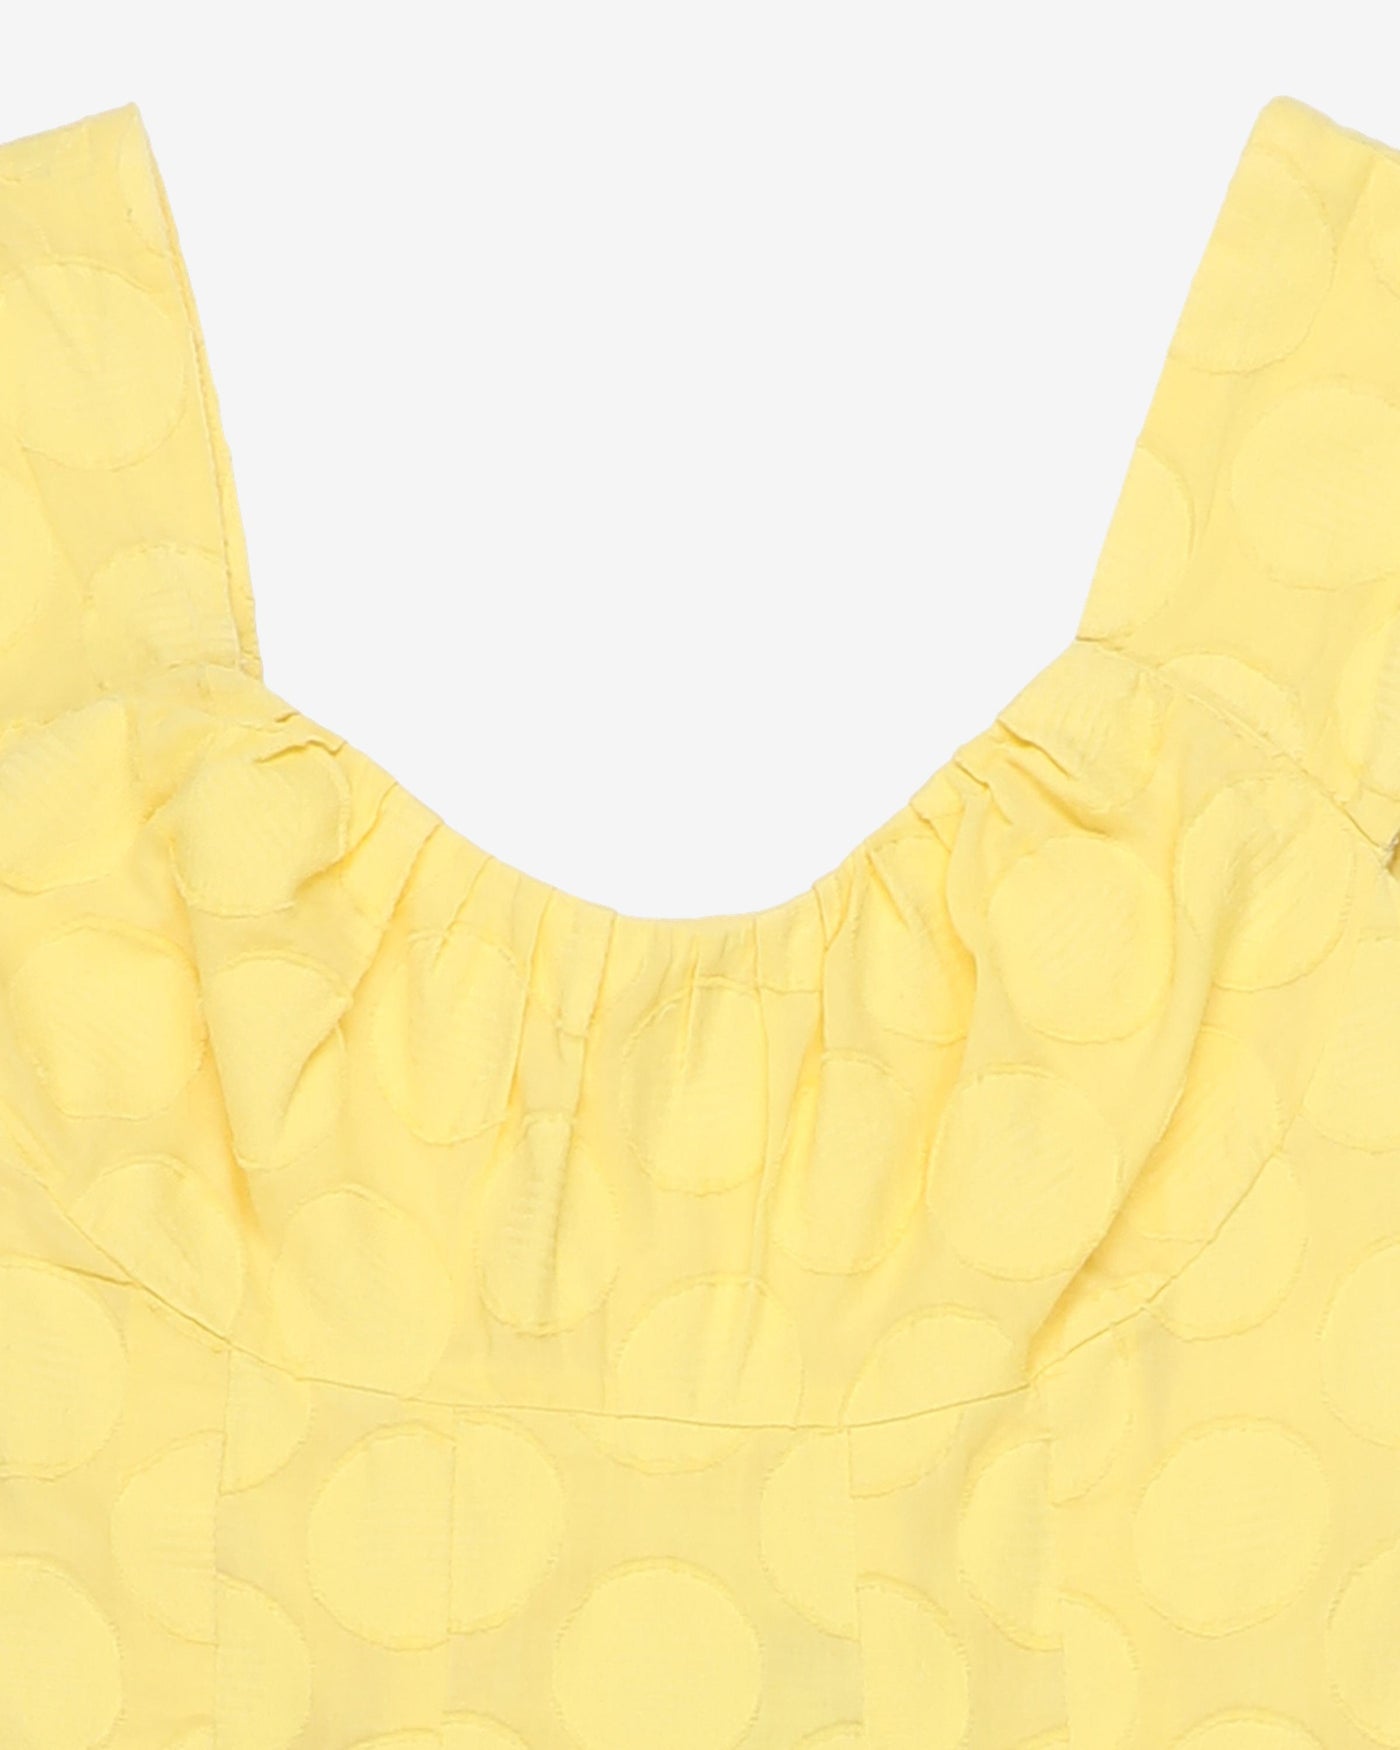 Calvin Klein yellow sun dress - XS / S